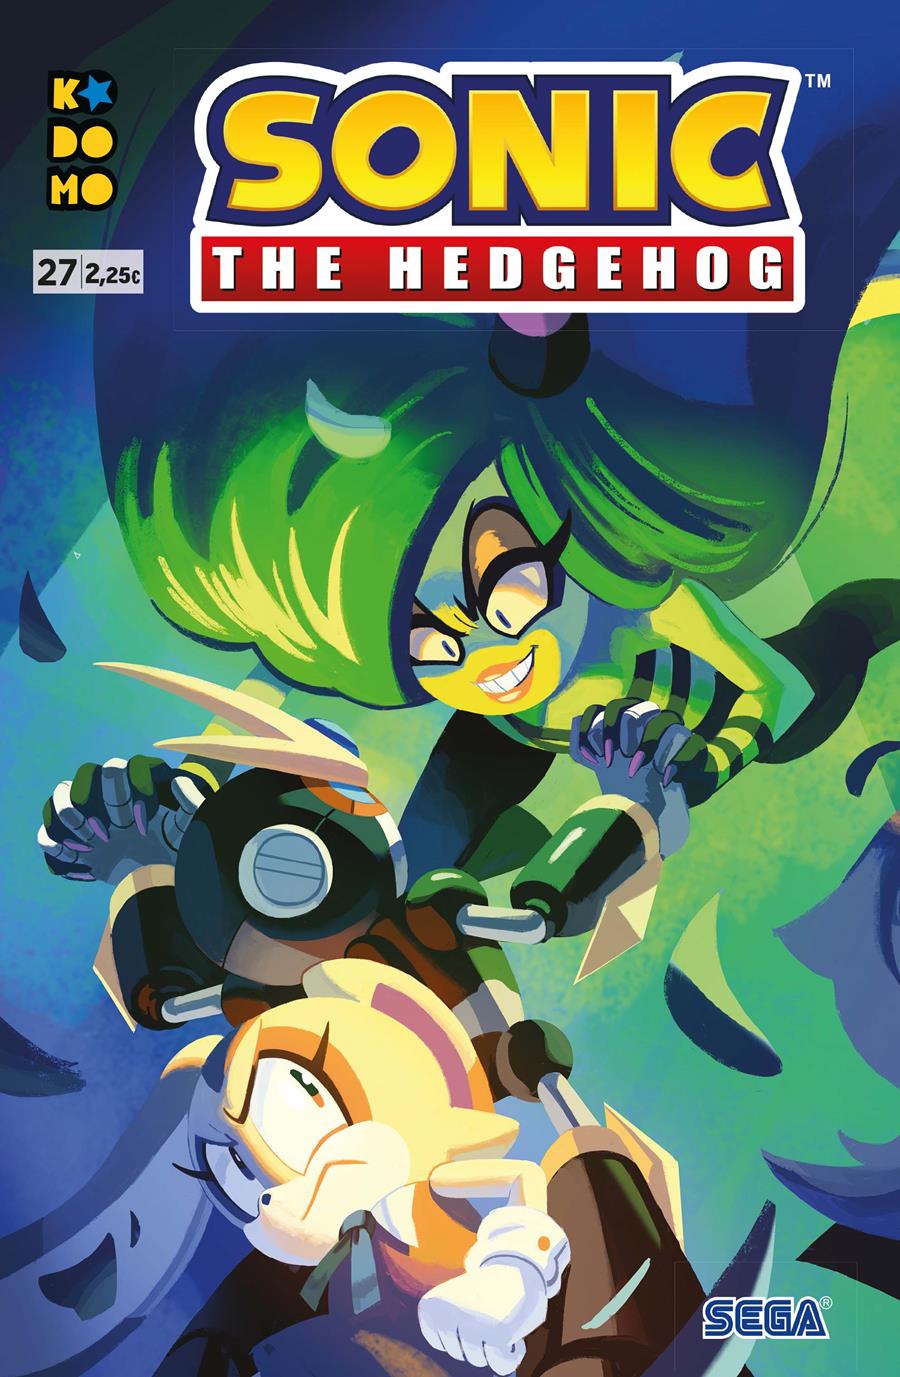 Sonic The Hedgehog núm. 27 | N1021-ECC56 | Evan Stanley / Ian Flynn / Priscilla Tramontano | Terra de Còmic - Tu tienda de cómics online especializada en cómics, manga y merchandising